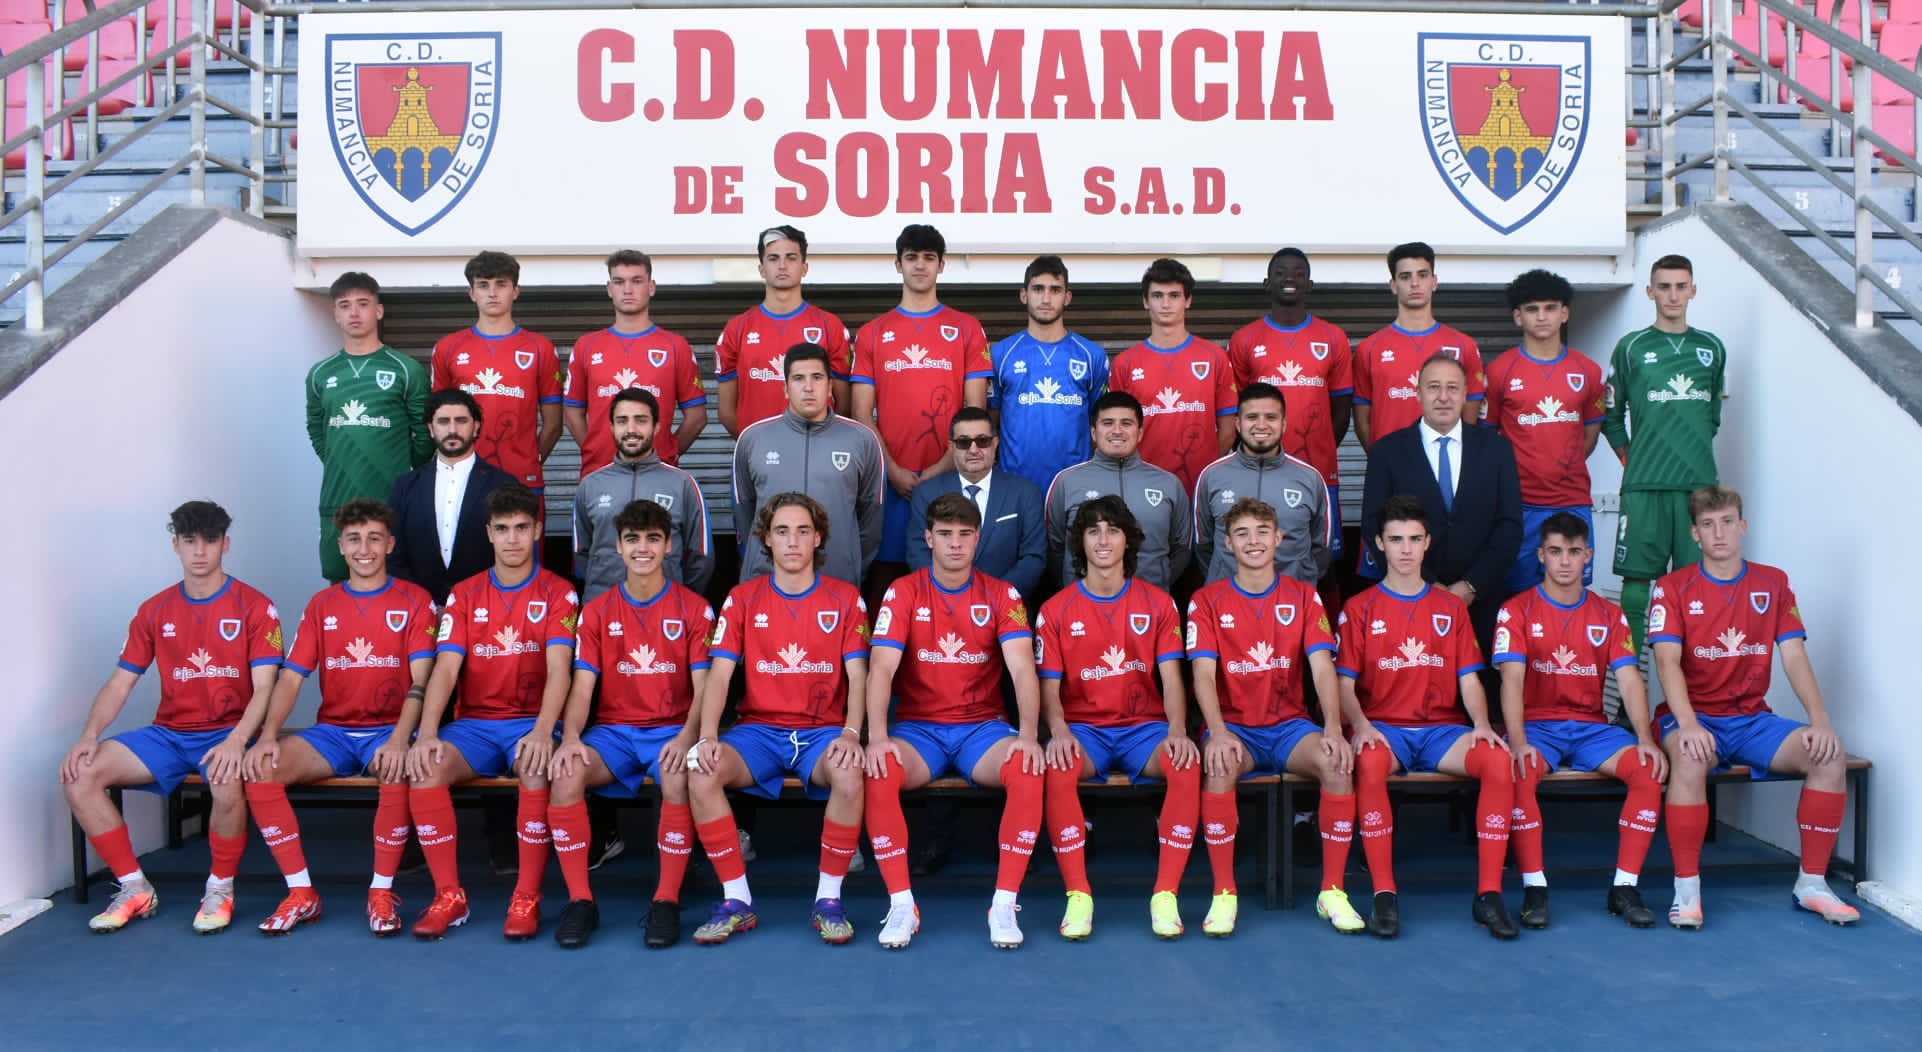 C.D. Numancia De Soria of Spain team photo.